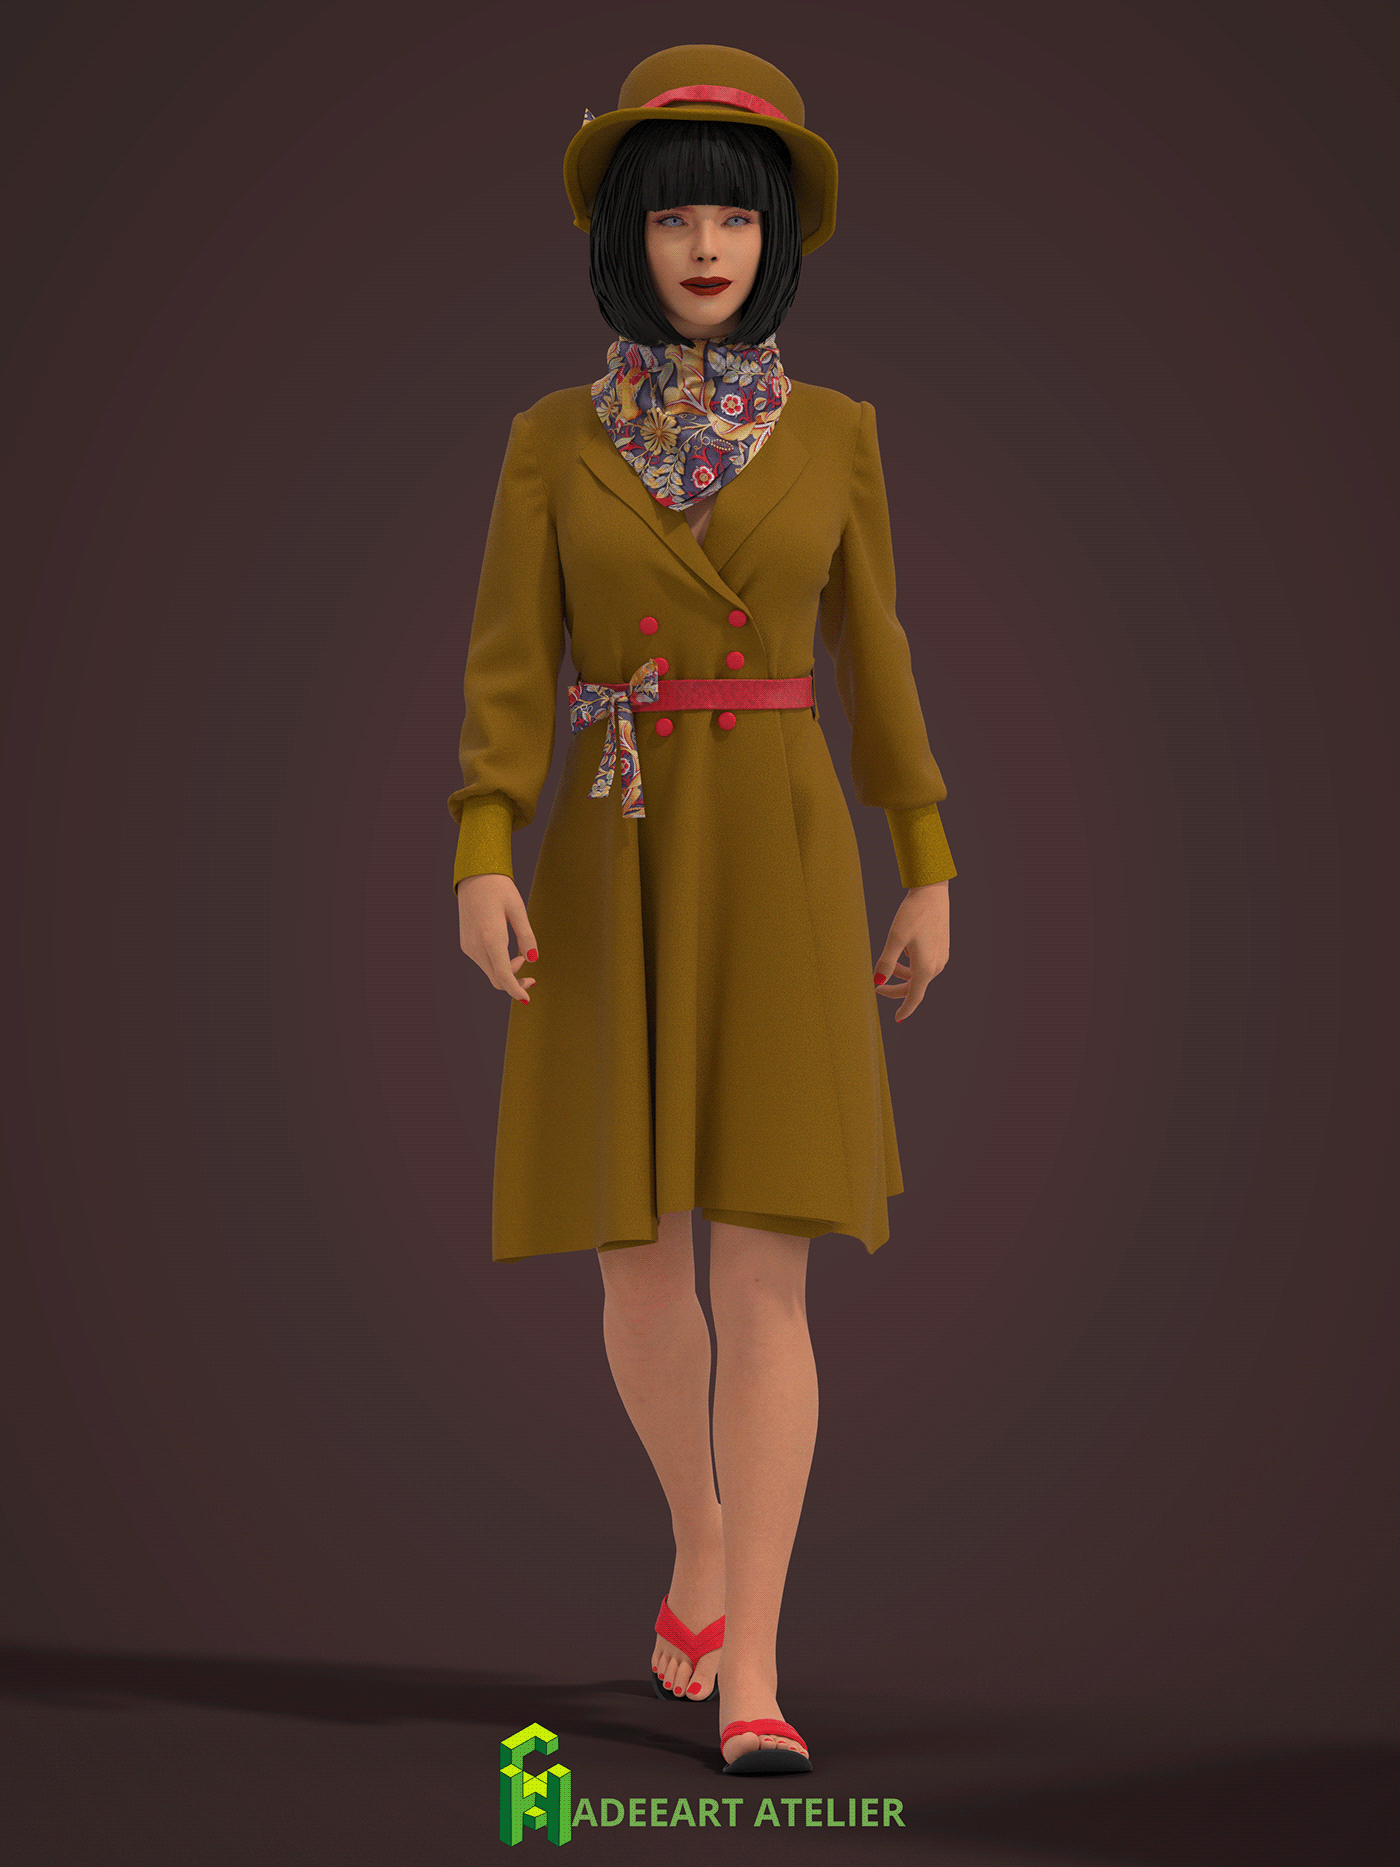 3dfashion 3dfashiondesign Clo3d digitalfashion dress fashion design itsclo3d textile virtualfashion woman